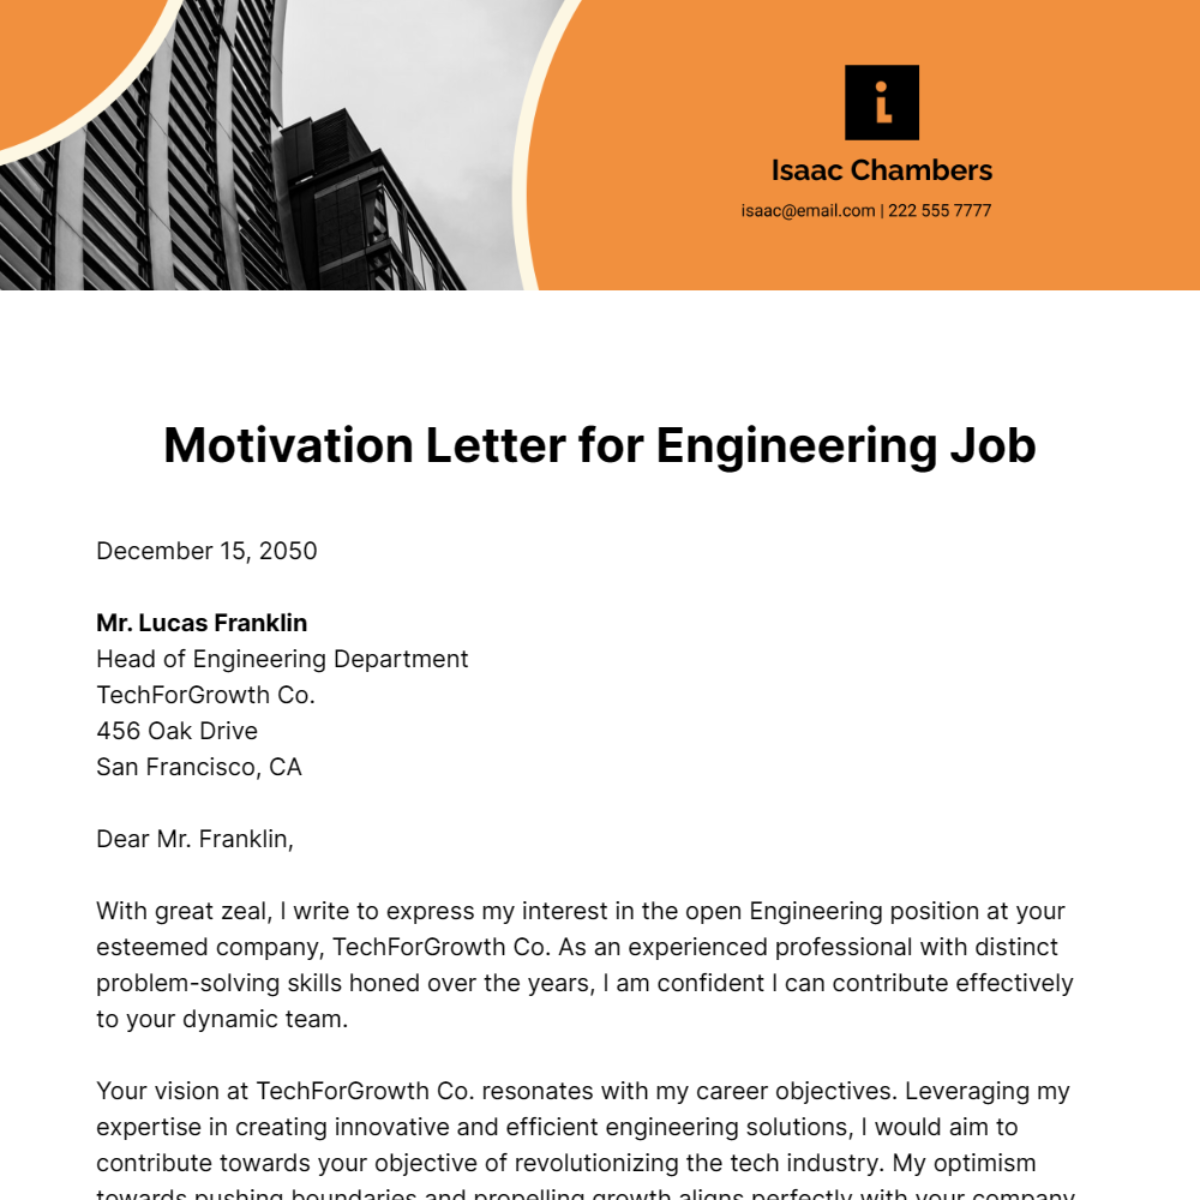 Motivation Letter for Engineering Job Template